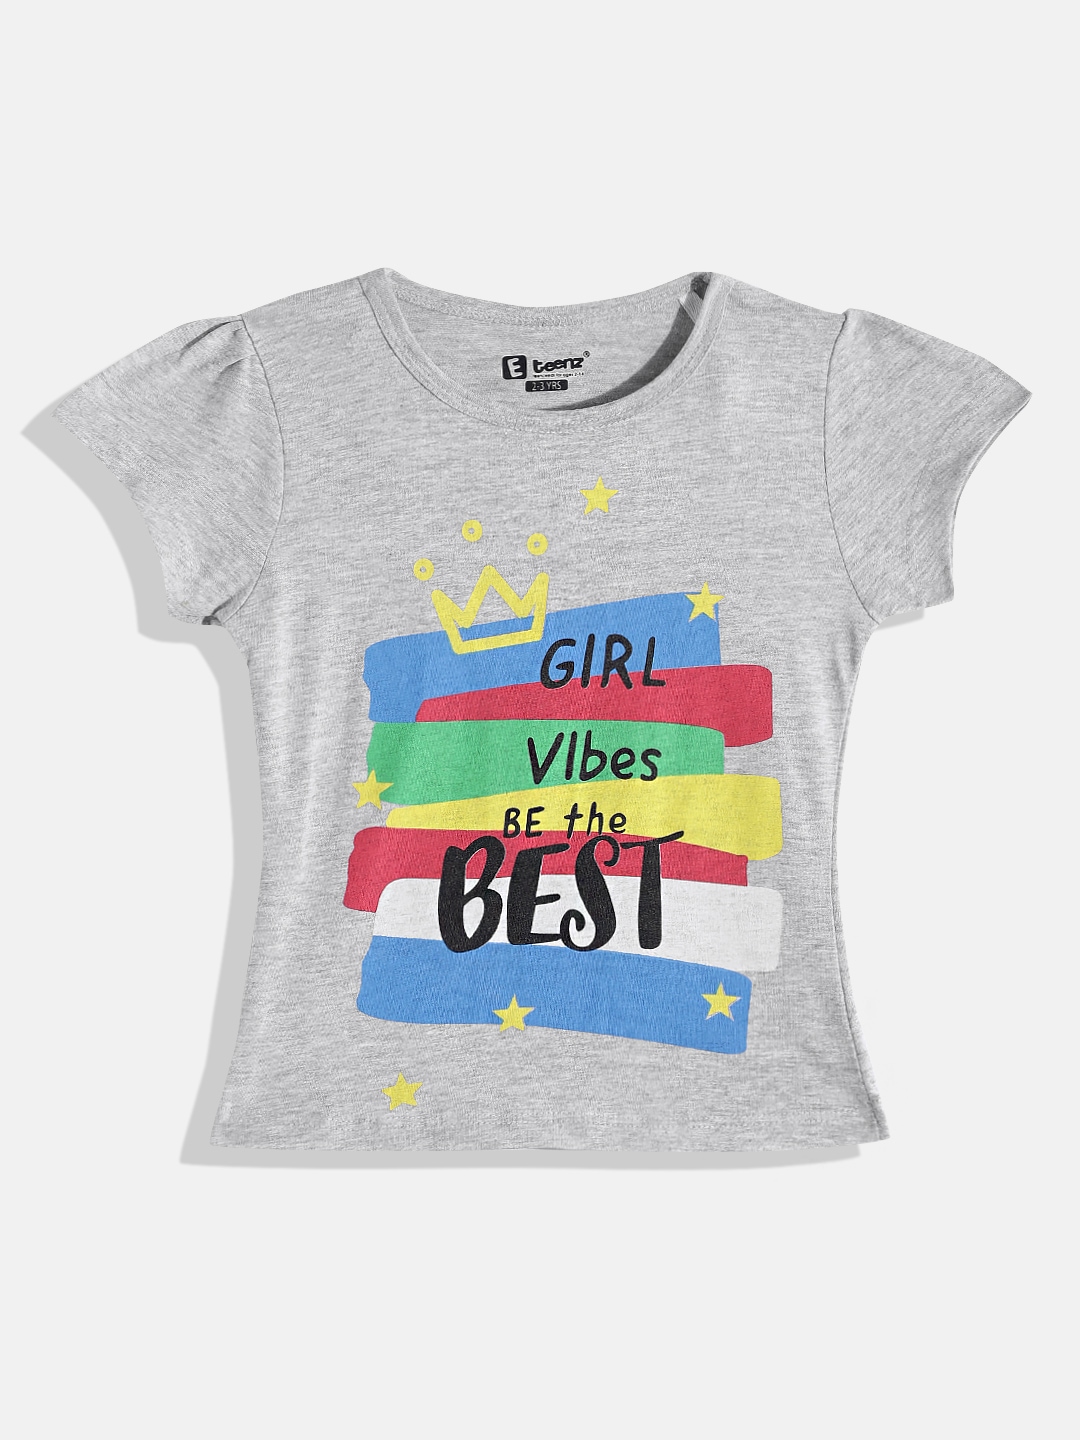 

Eteenz Girls Typography Printed Cotton T-shirt, Grey melange